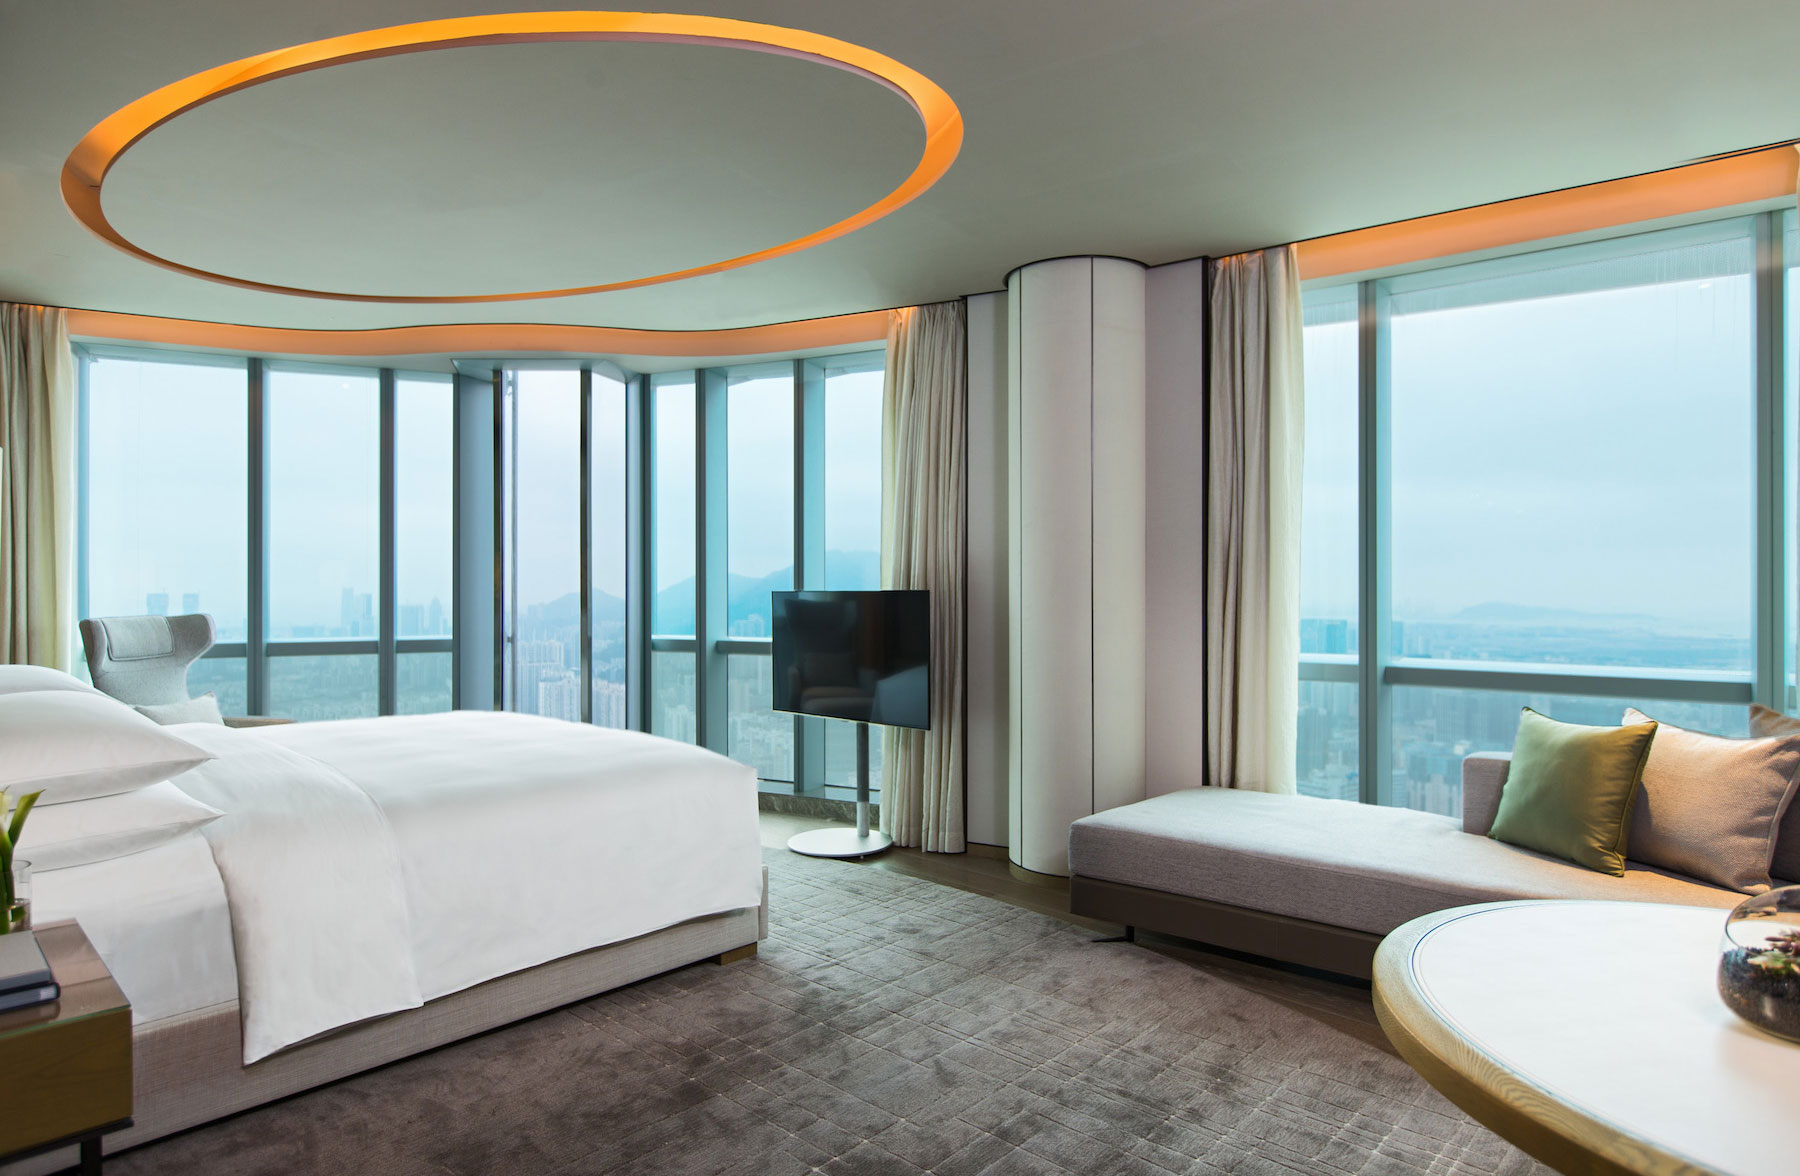 Revive Summer With Inspiring Stay at Shenzhen Marriott Hotel Nanshan